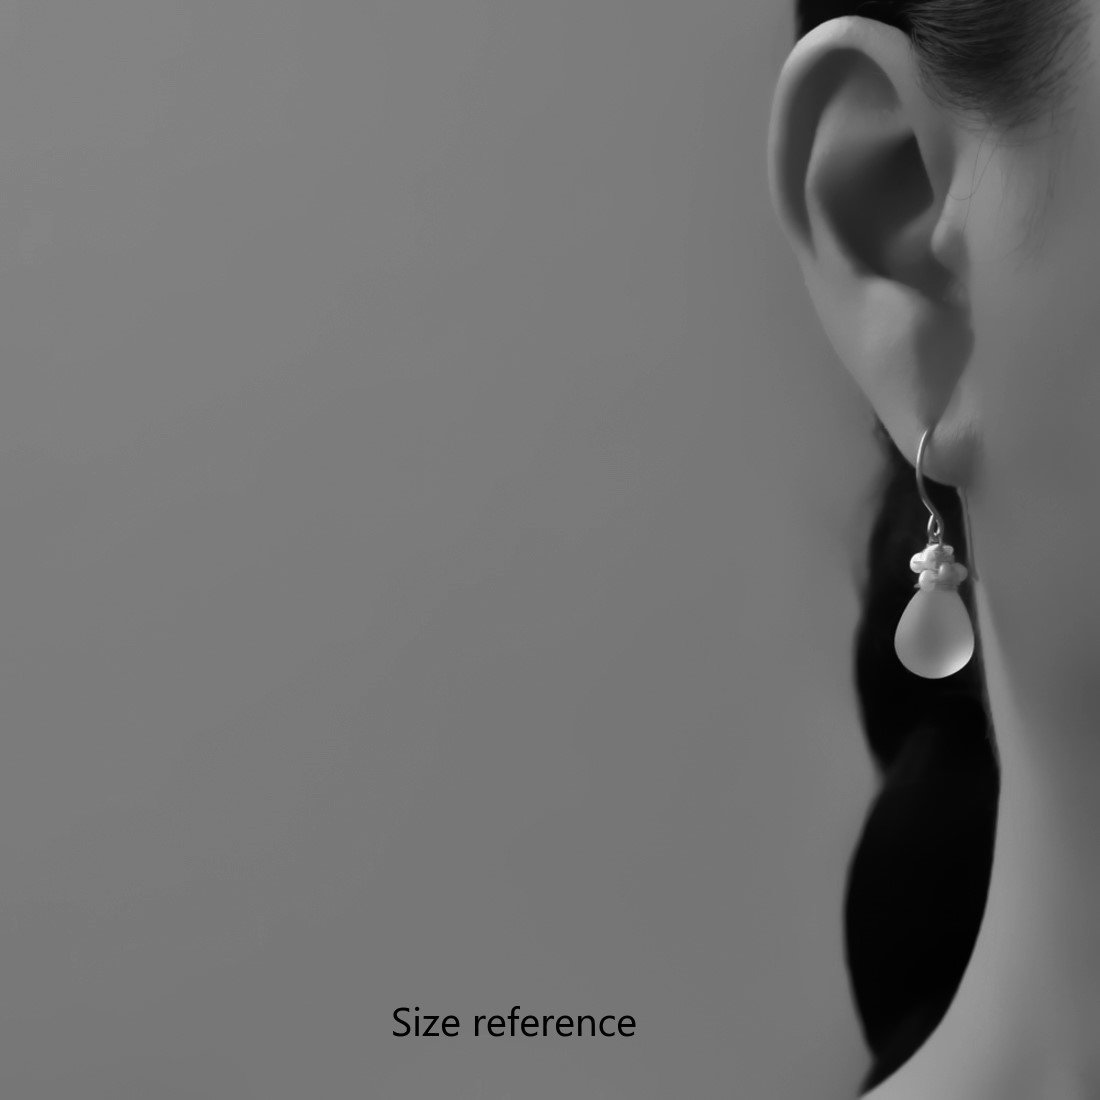 Image of Teal Glass Seed Pearl Earrings